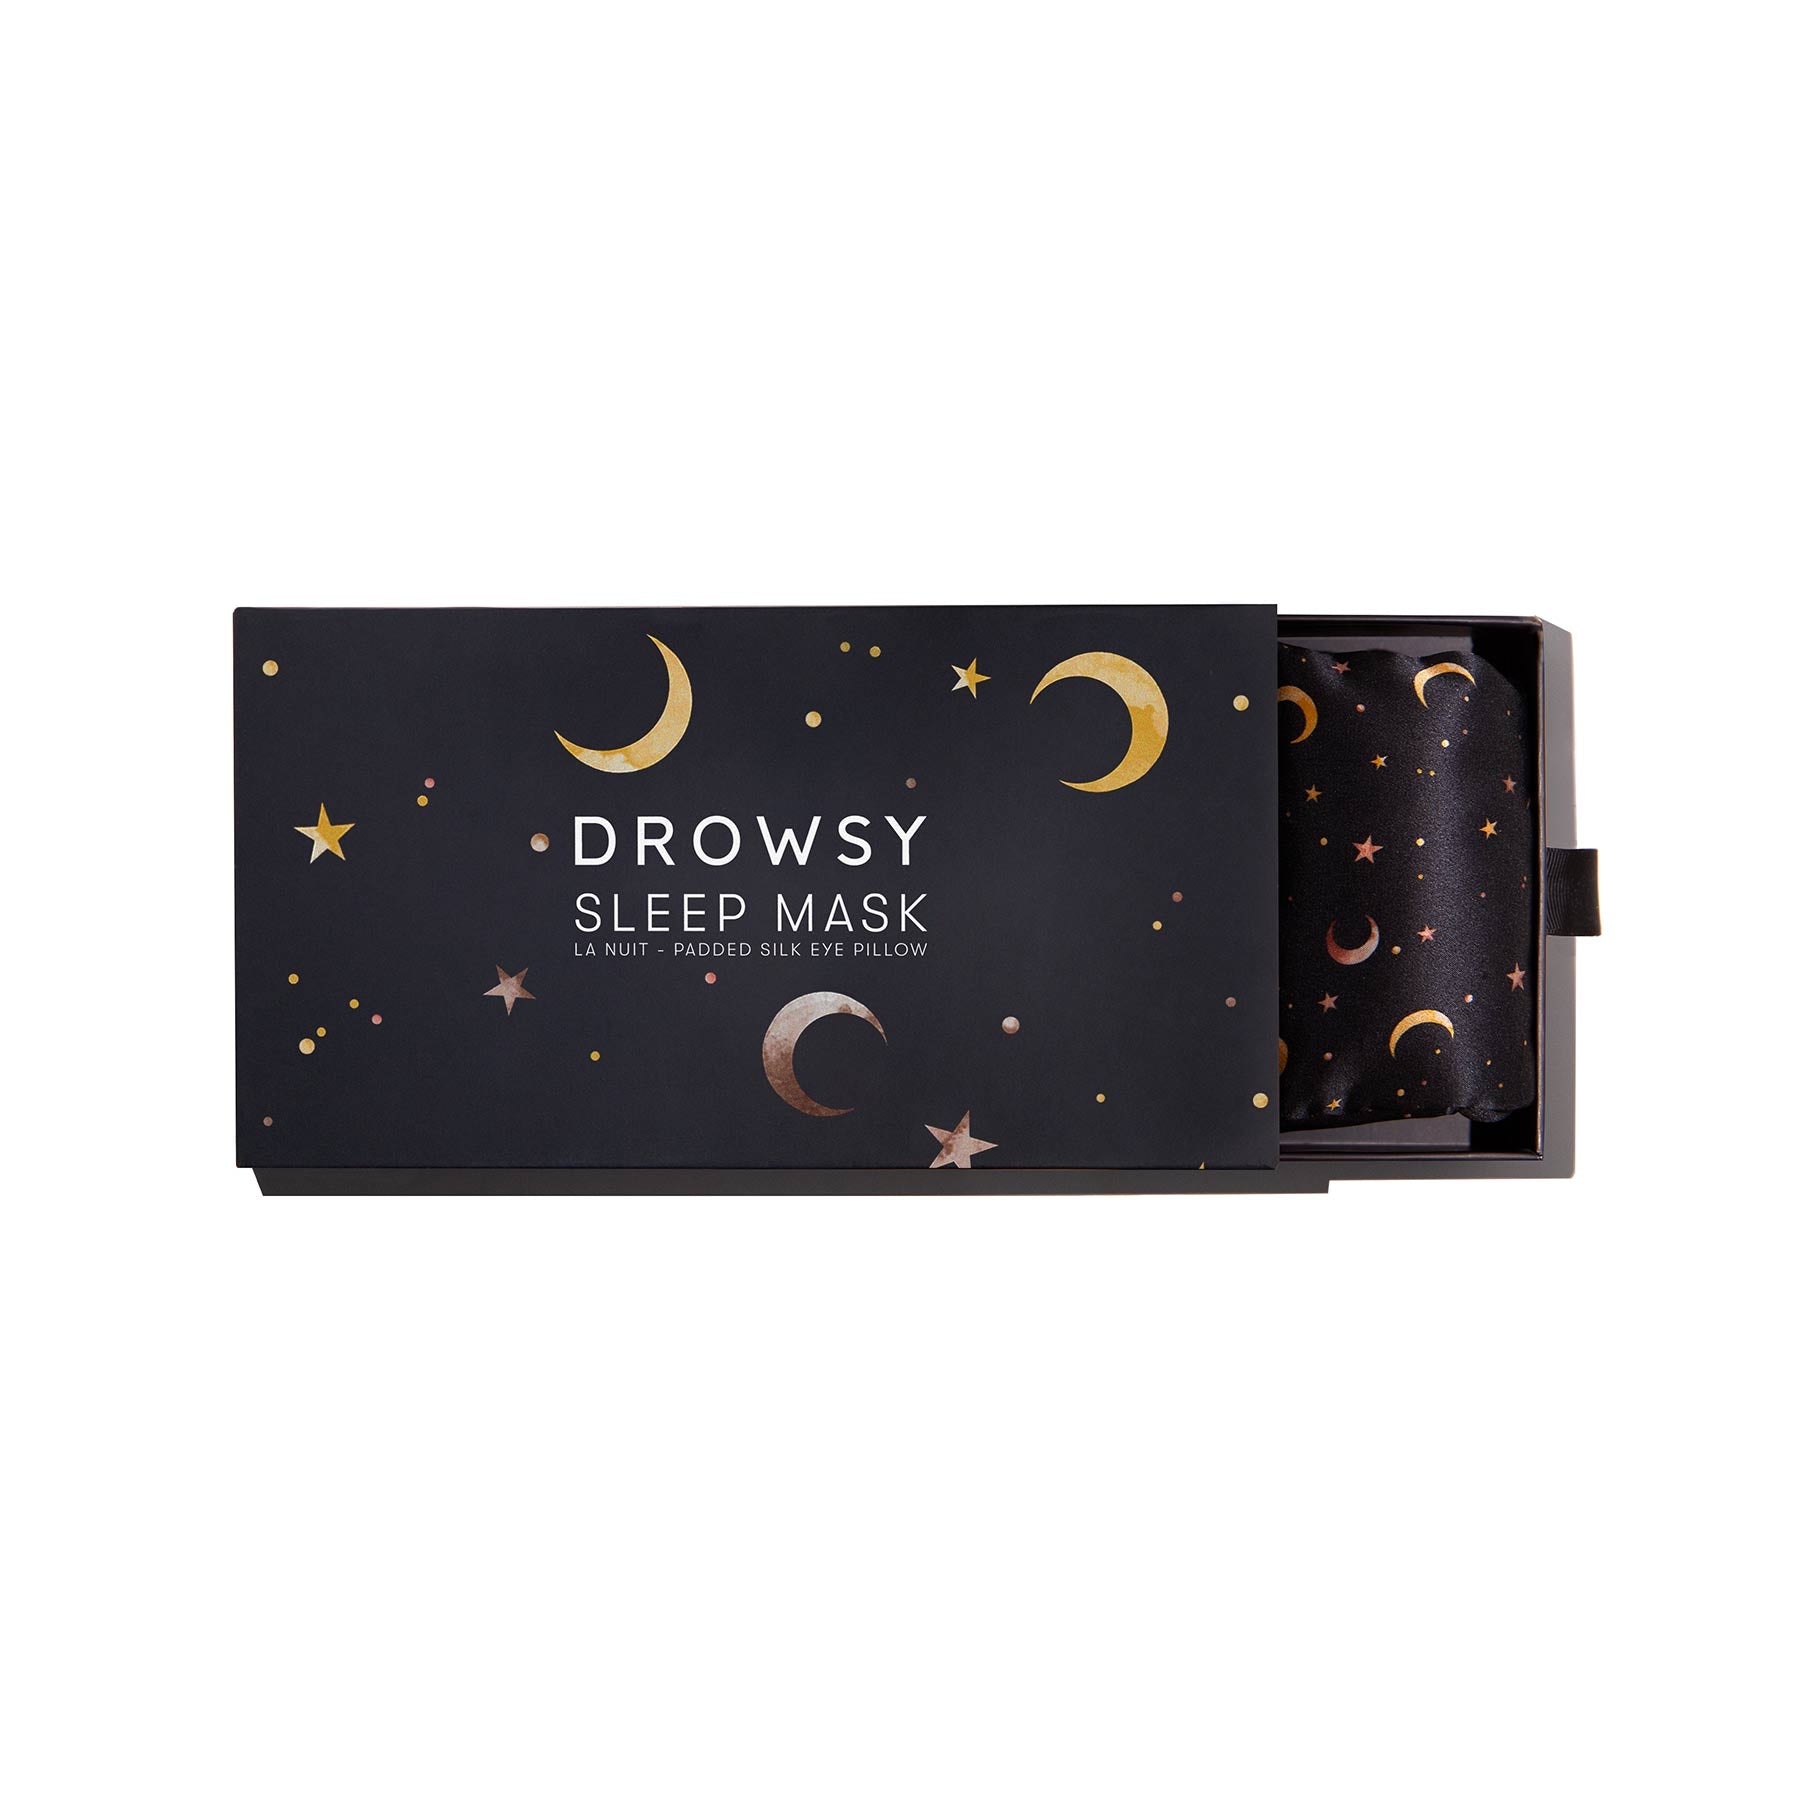 Drowsy Sleep Co. La nuit Sleep Mask Box on white background